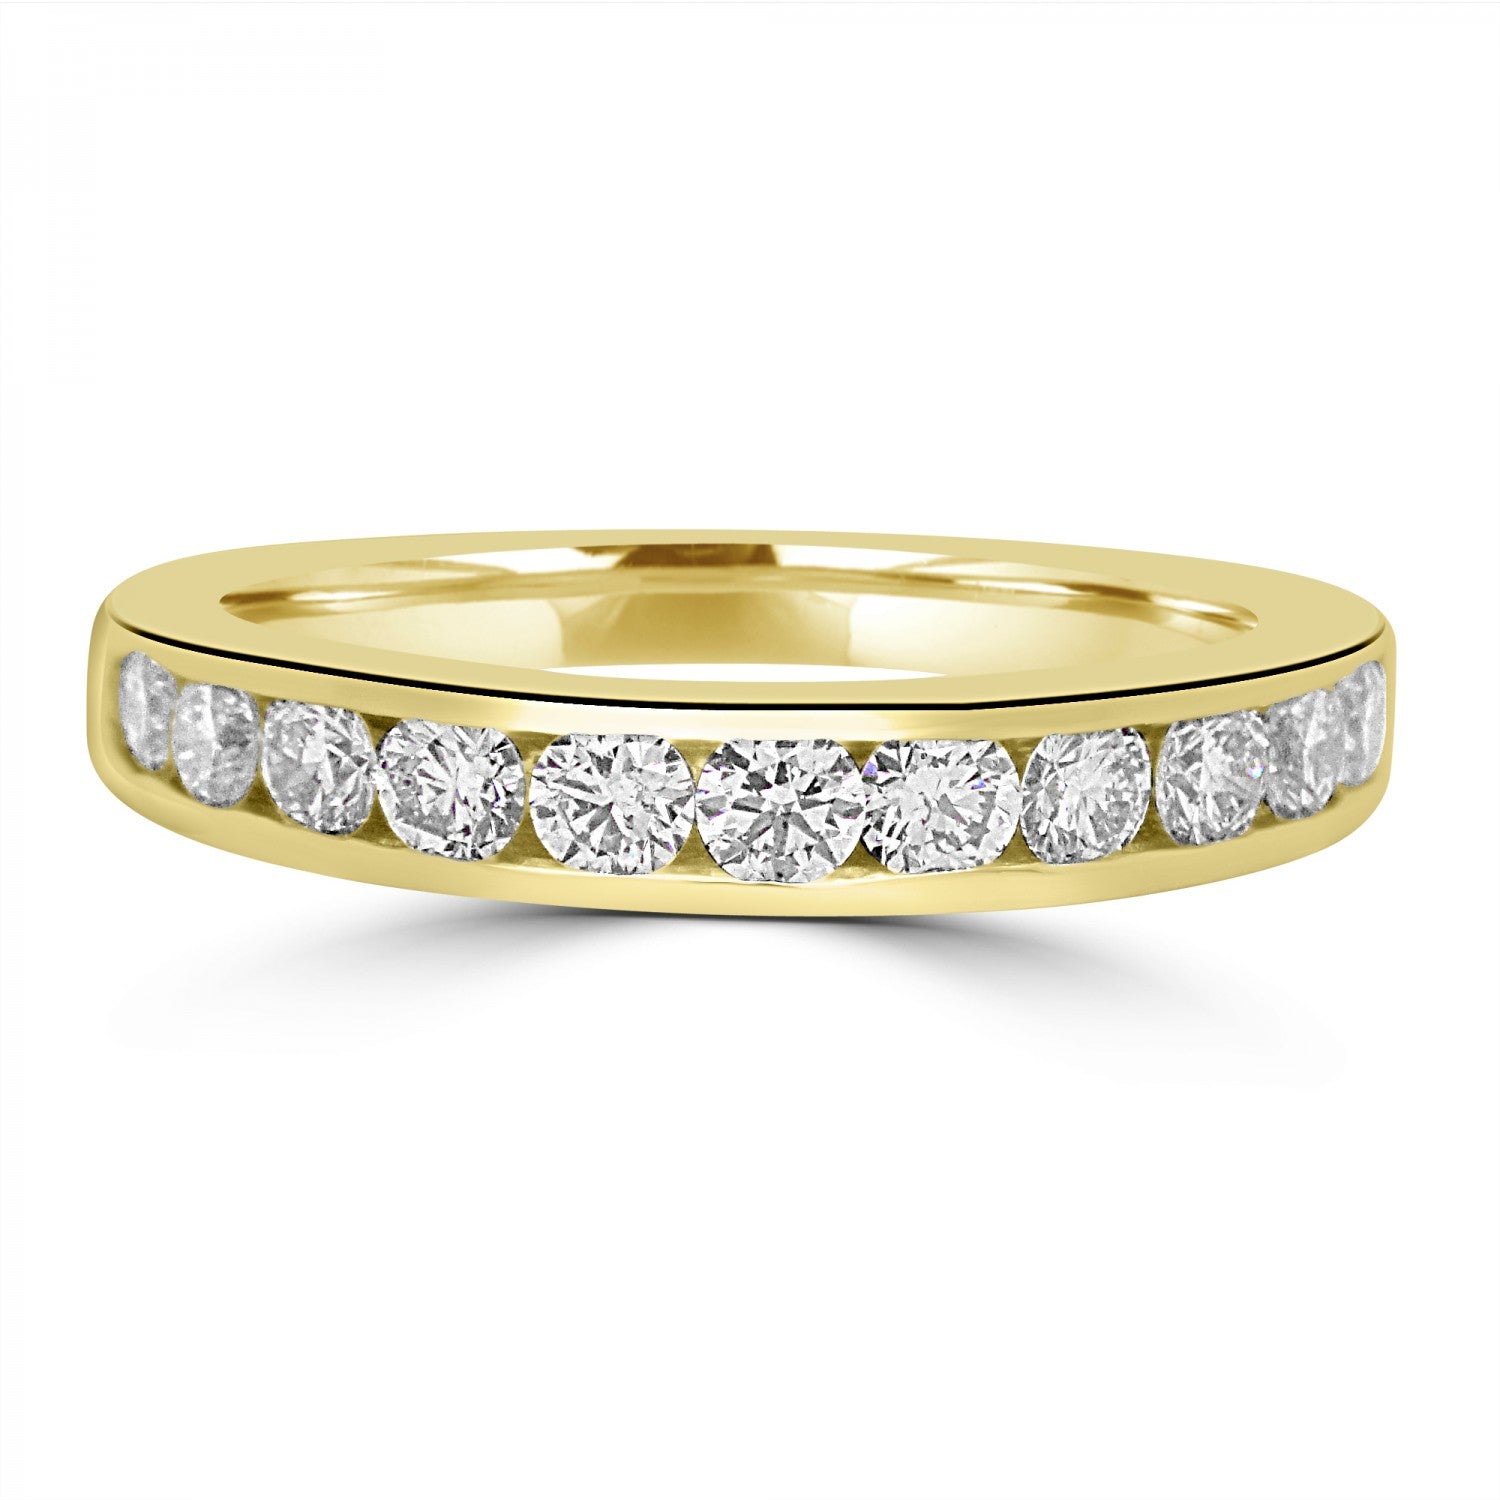 ROUND BRILLIANT DIAMOND CHANNEL SET ETERNITY/WEDDING RING